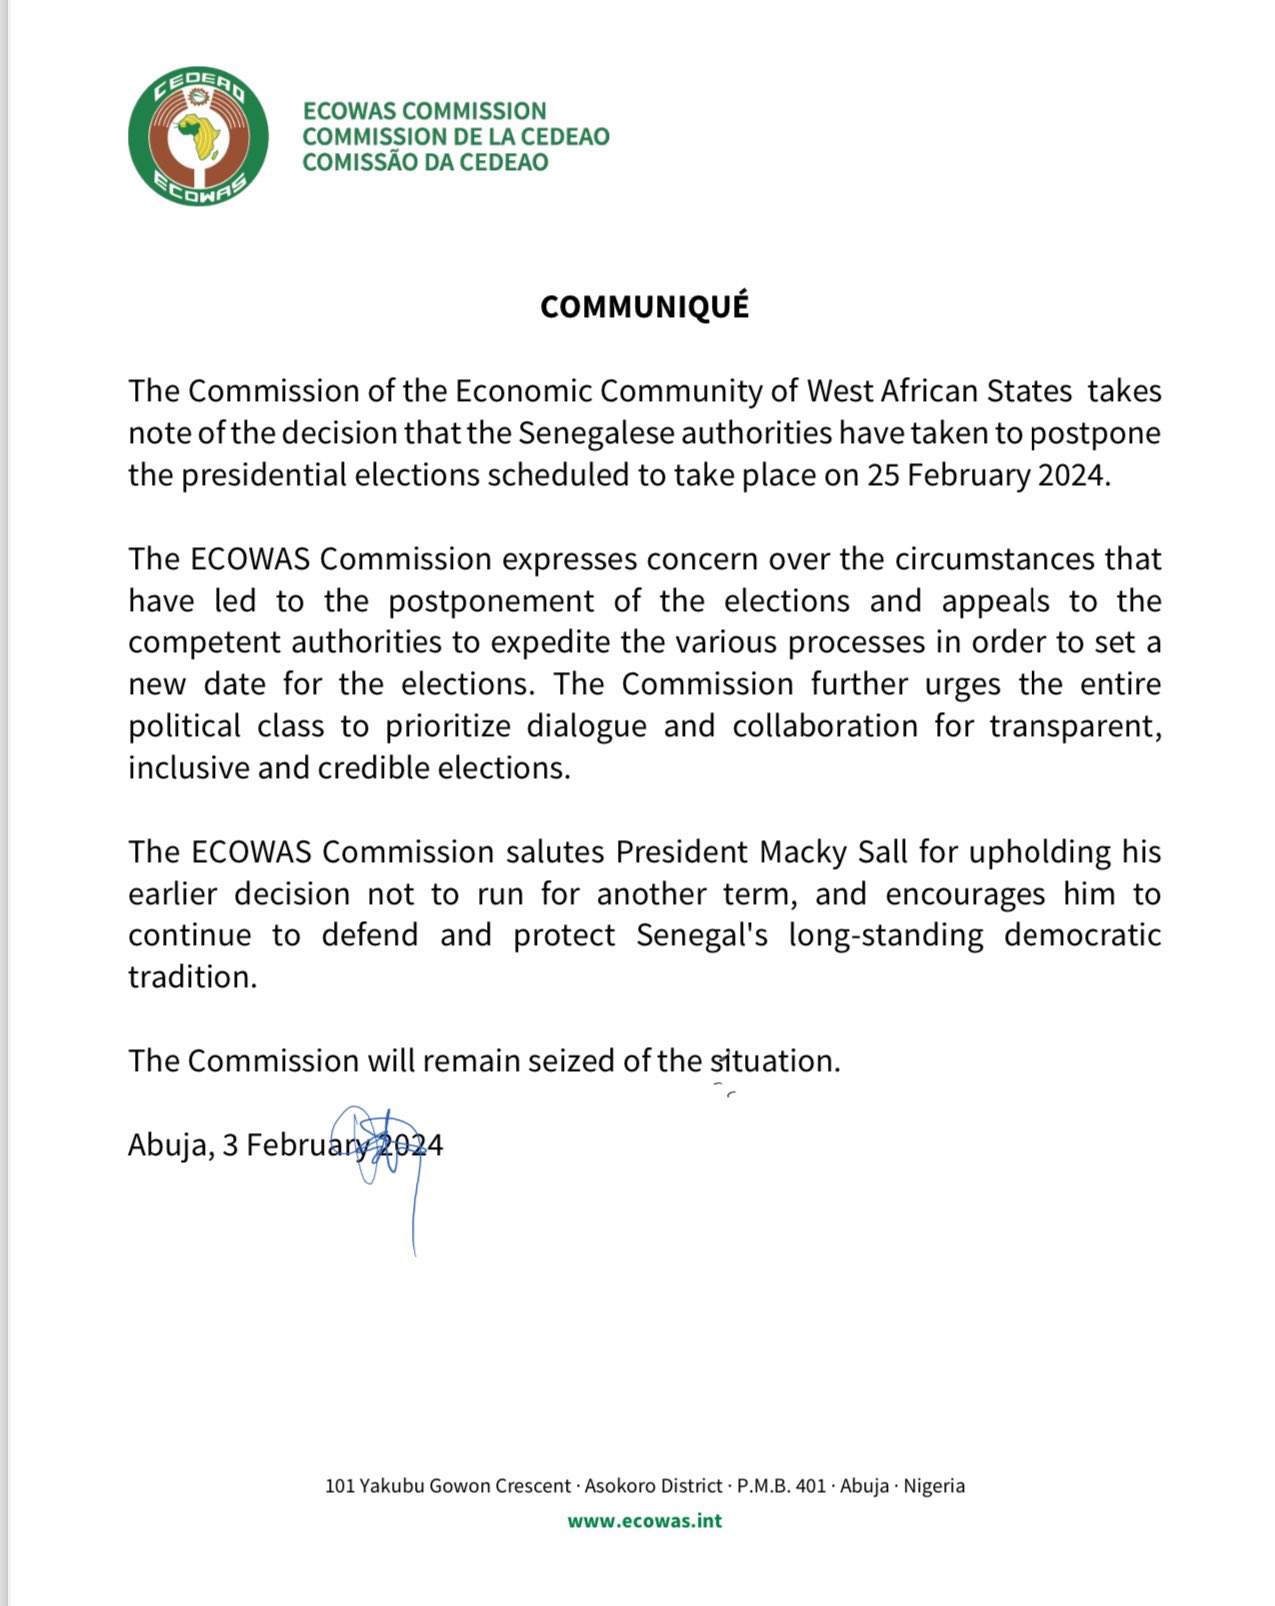 ECOWAS bemoans Senegal’s decision to postpone presidential elections